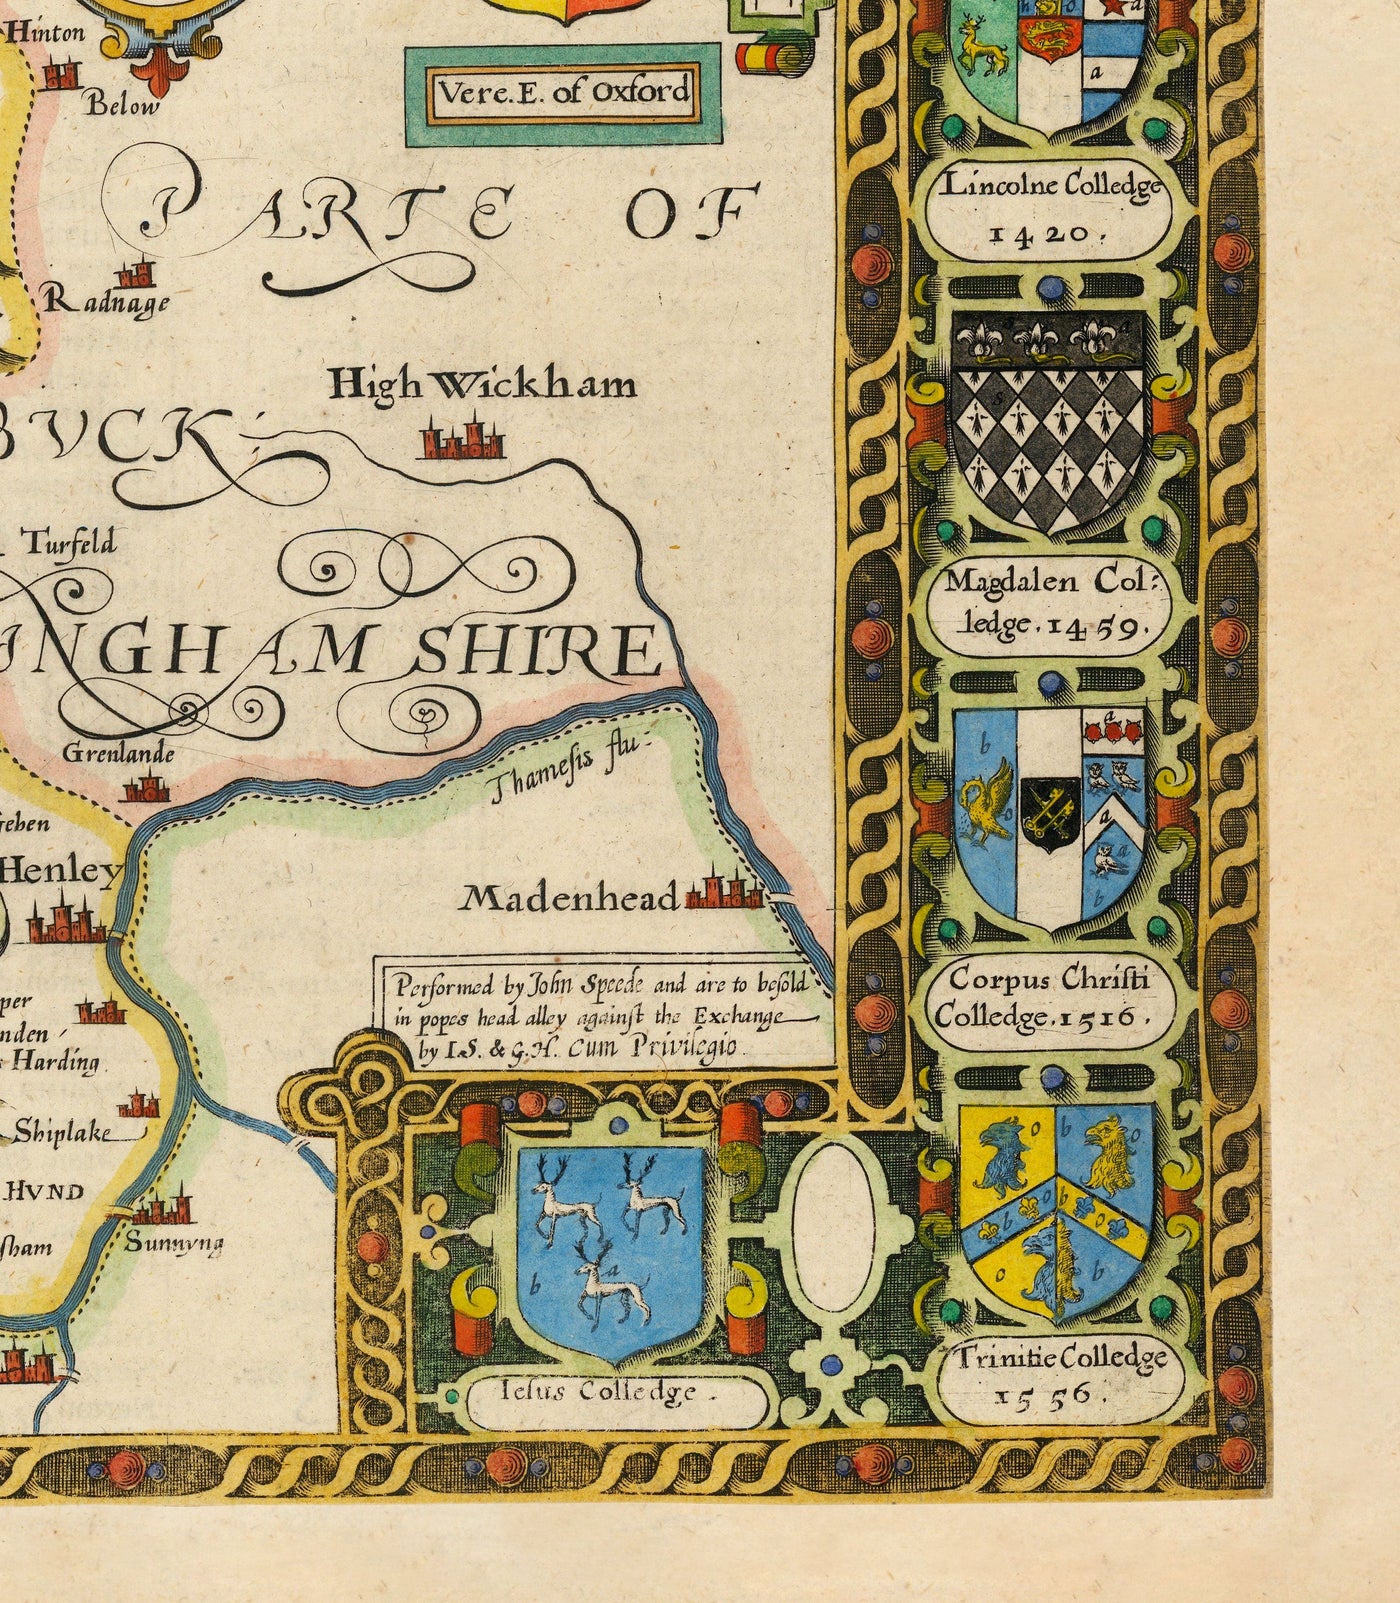 Ancienne carte d'Oxfordshire, 1611 par John Speed ​​- Oxford, Banbury, Abingdon, Bicester